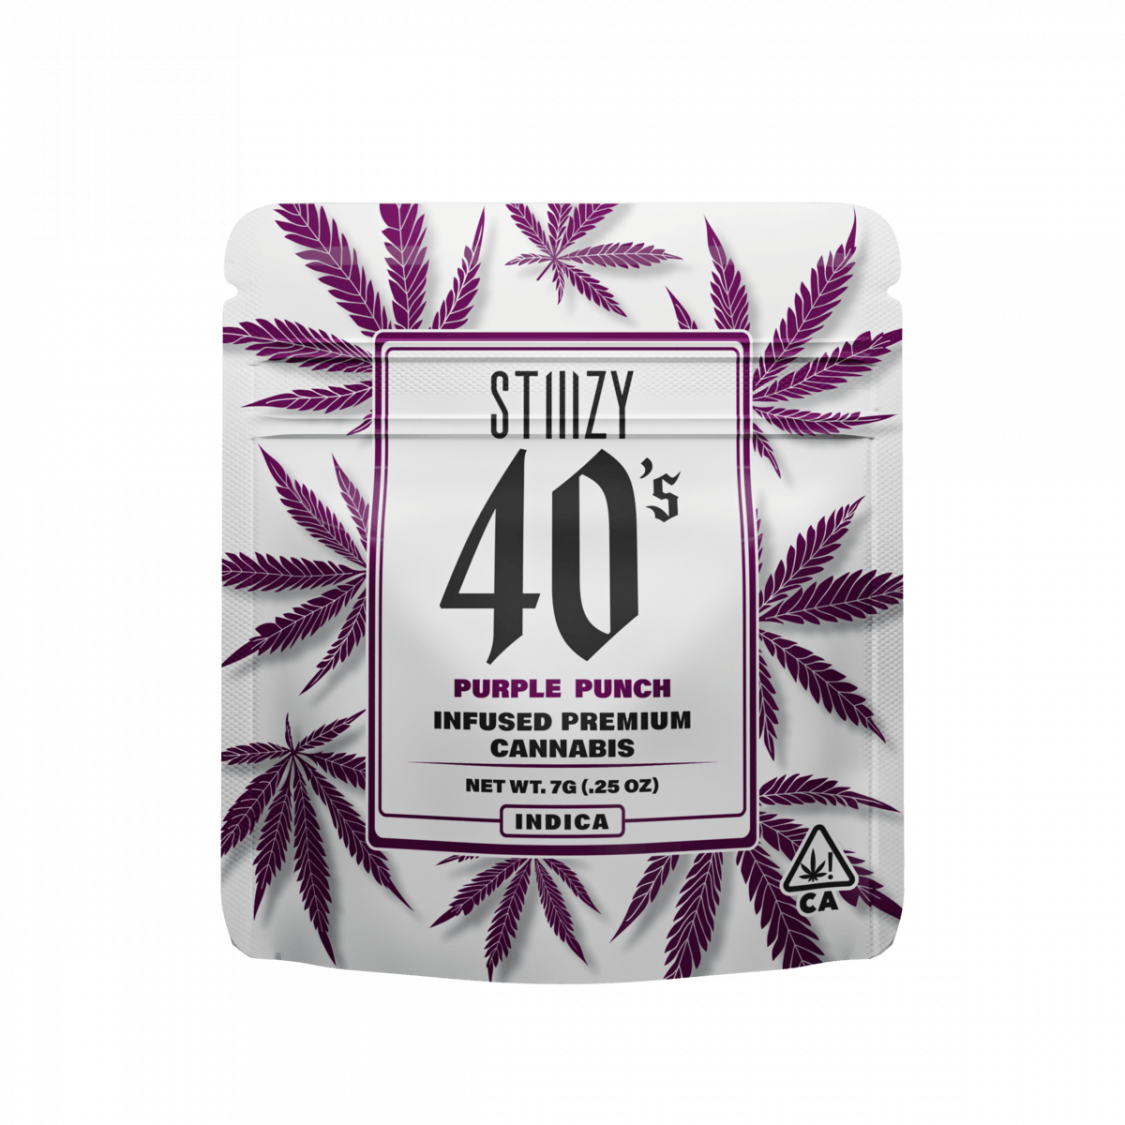 STIIIZY Purple Punch 40s Infused Flower Flower Infused Flower